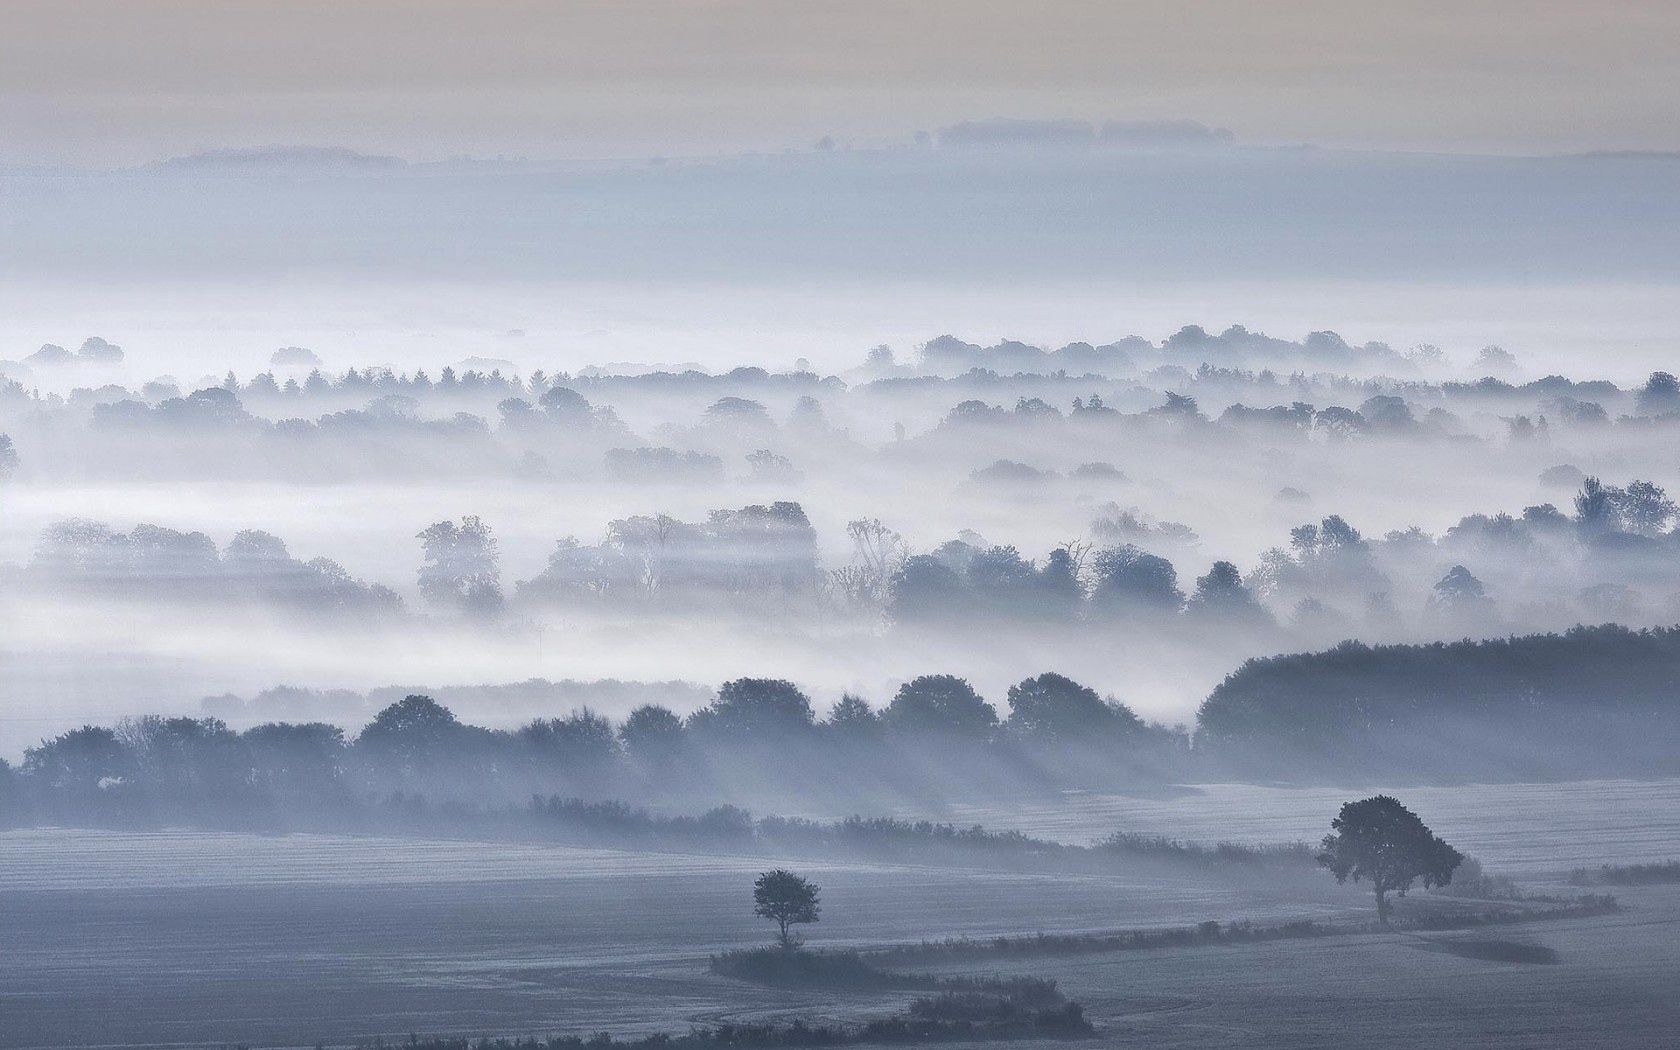 Popular Fog Image for Phone